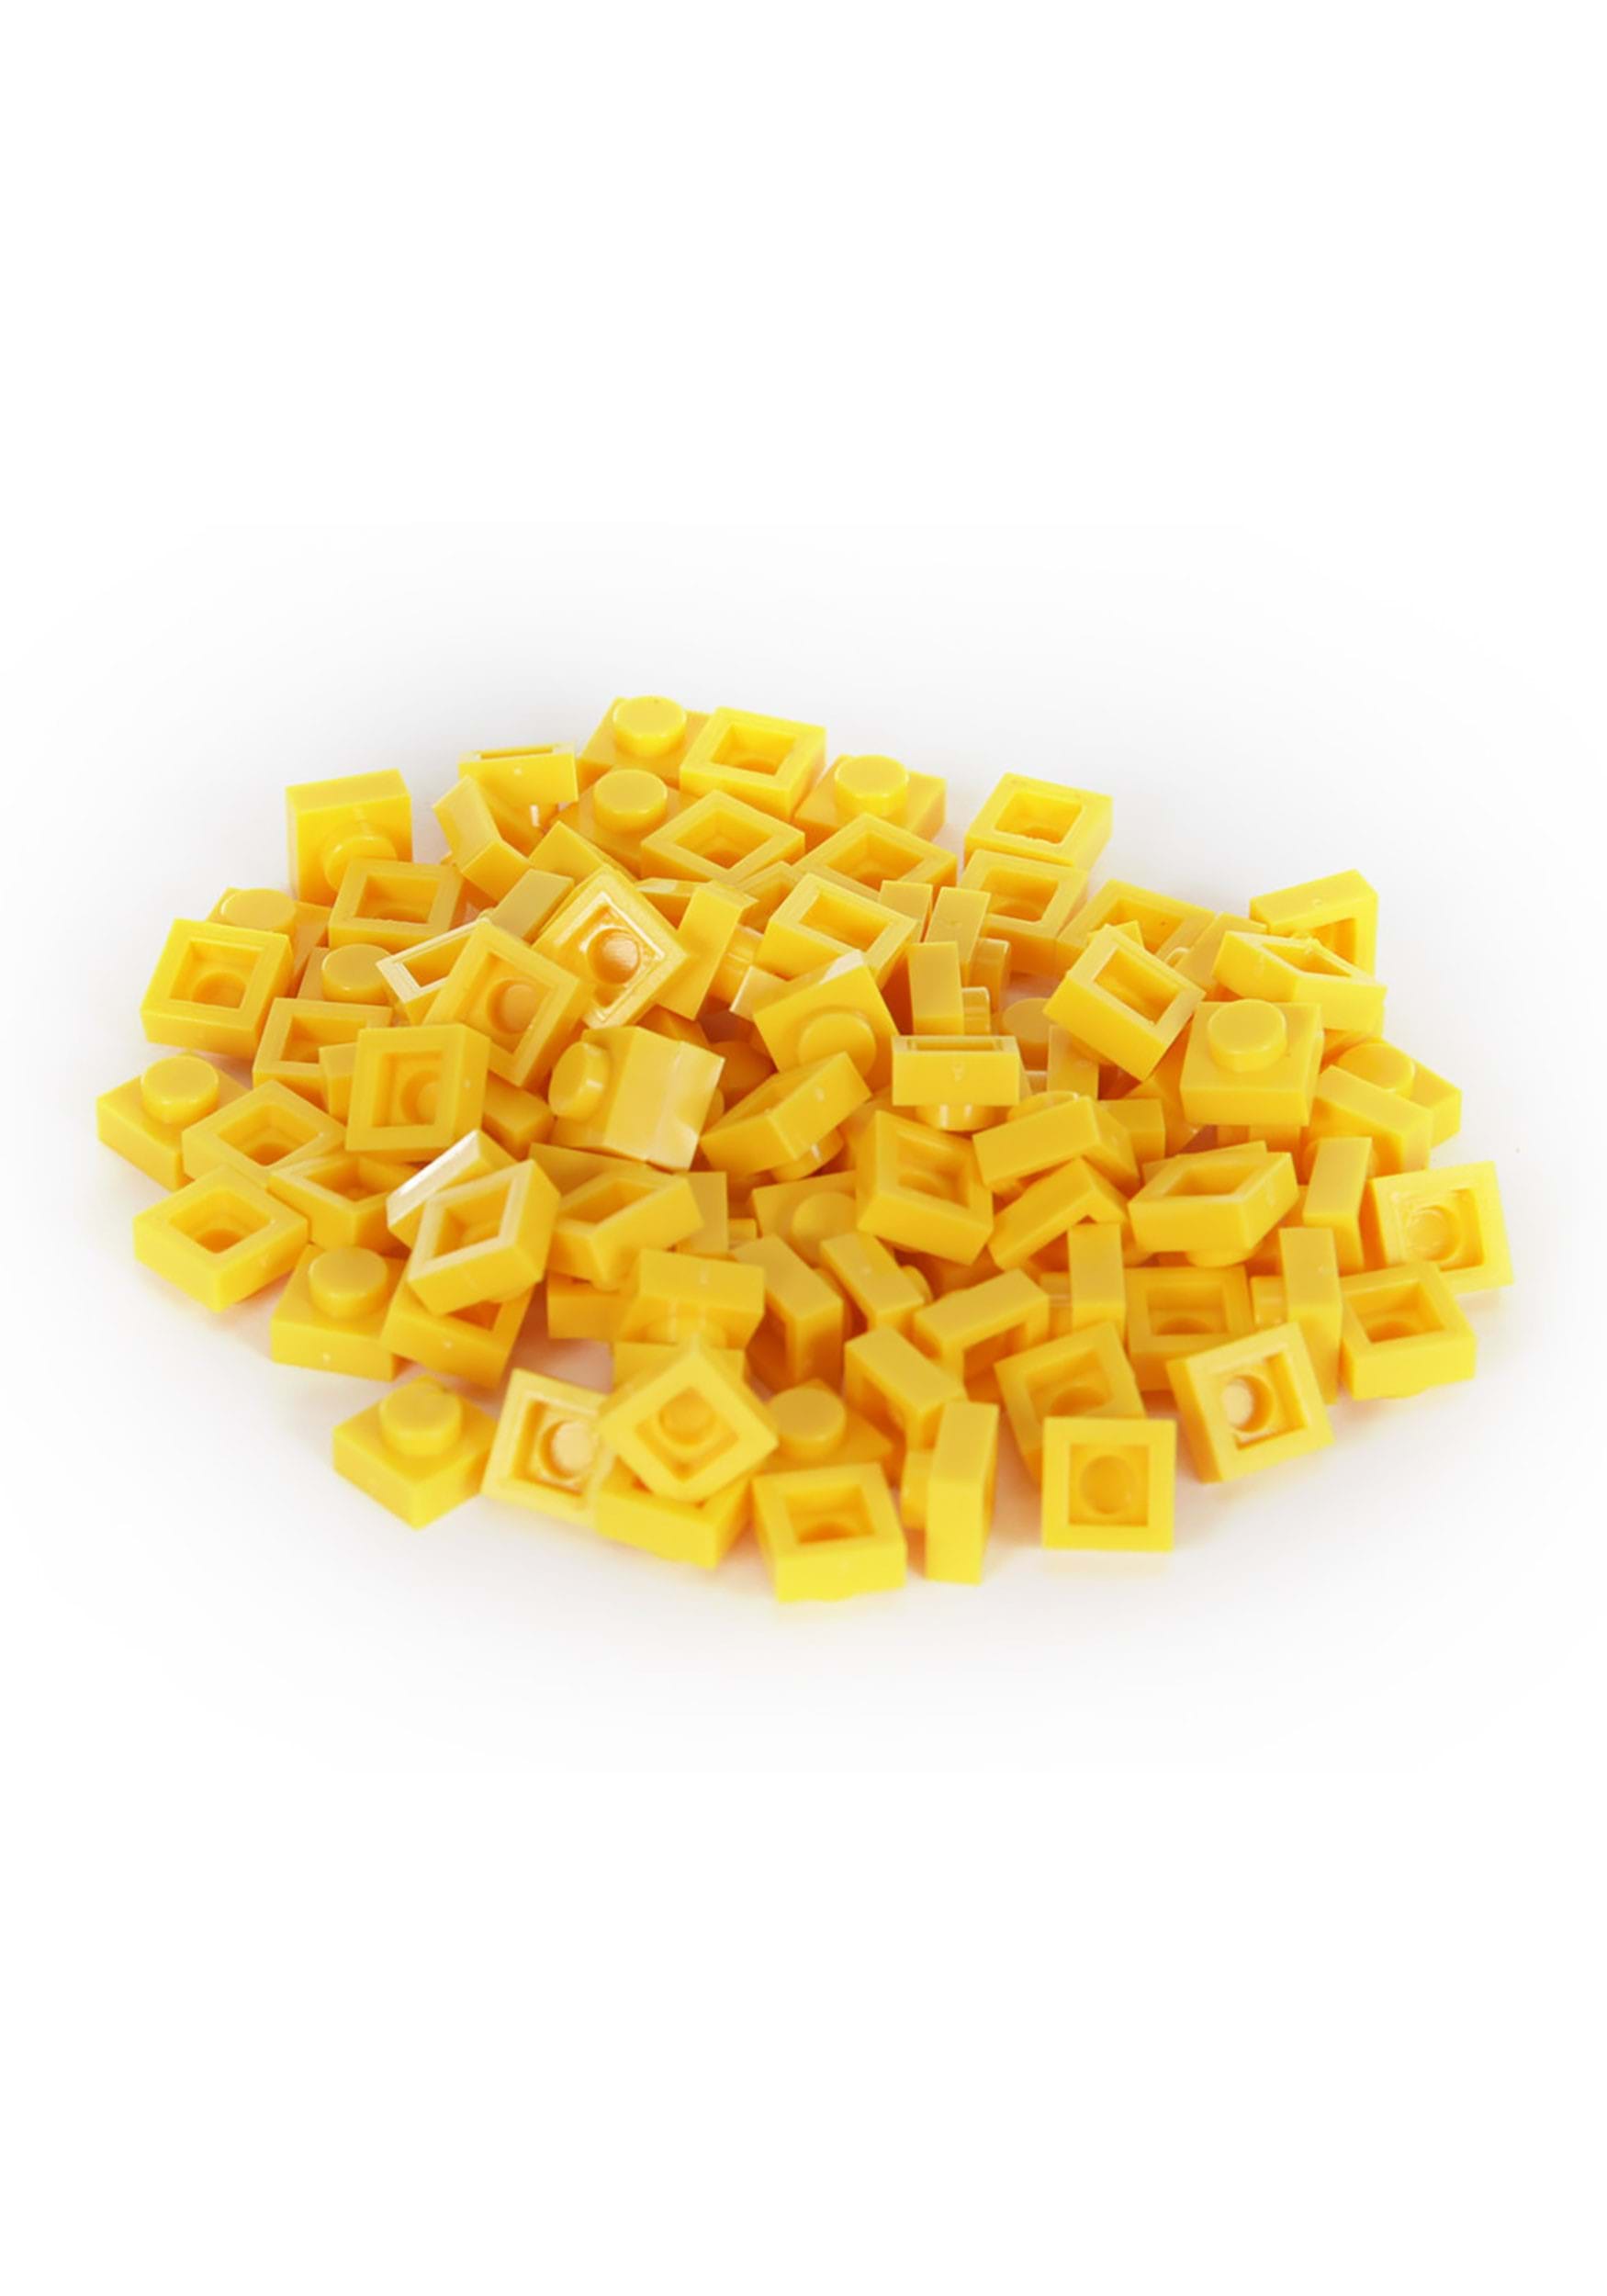 Yellow Bricky Blocks 100 Pieces 1x1